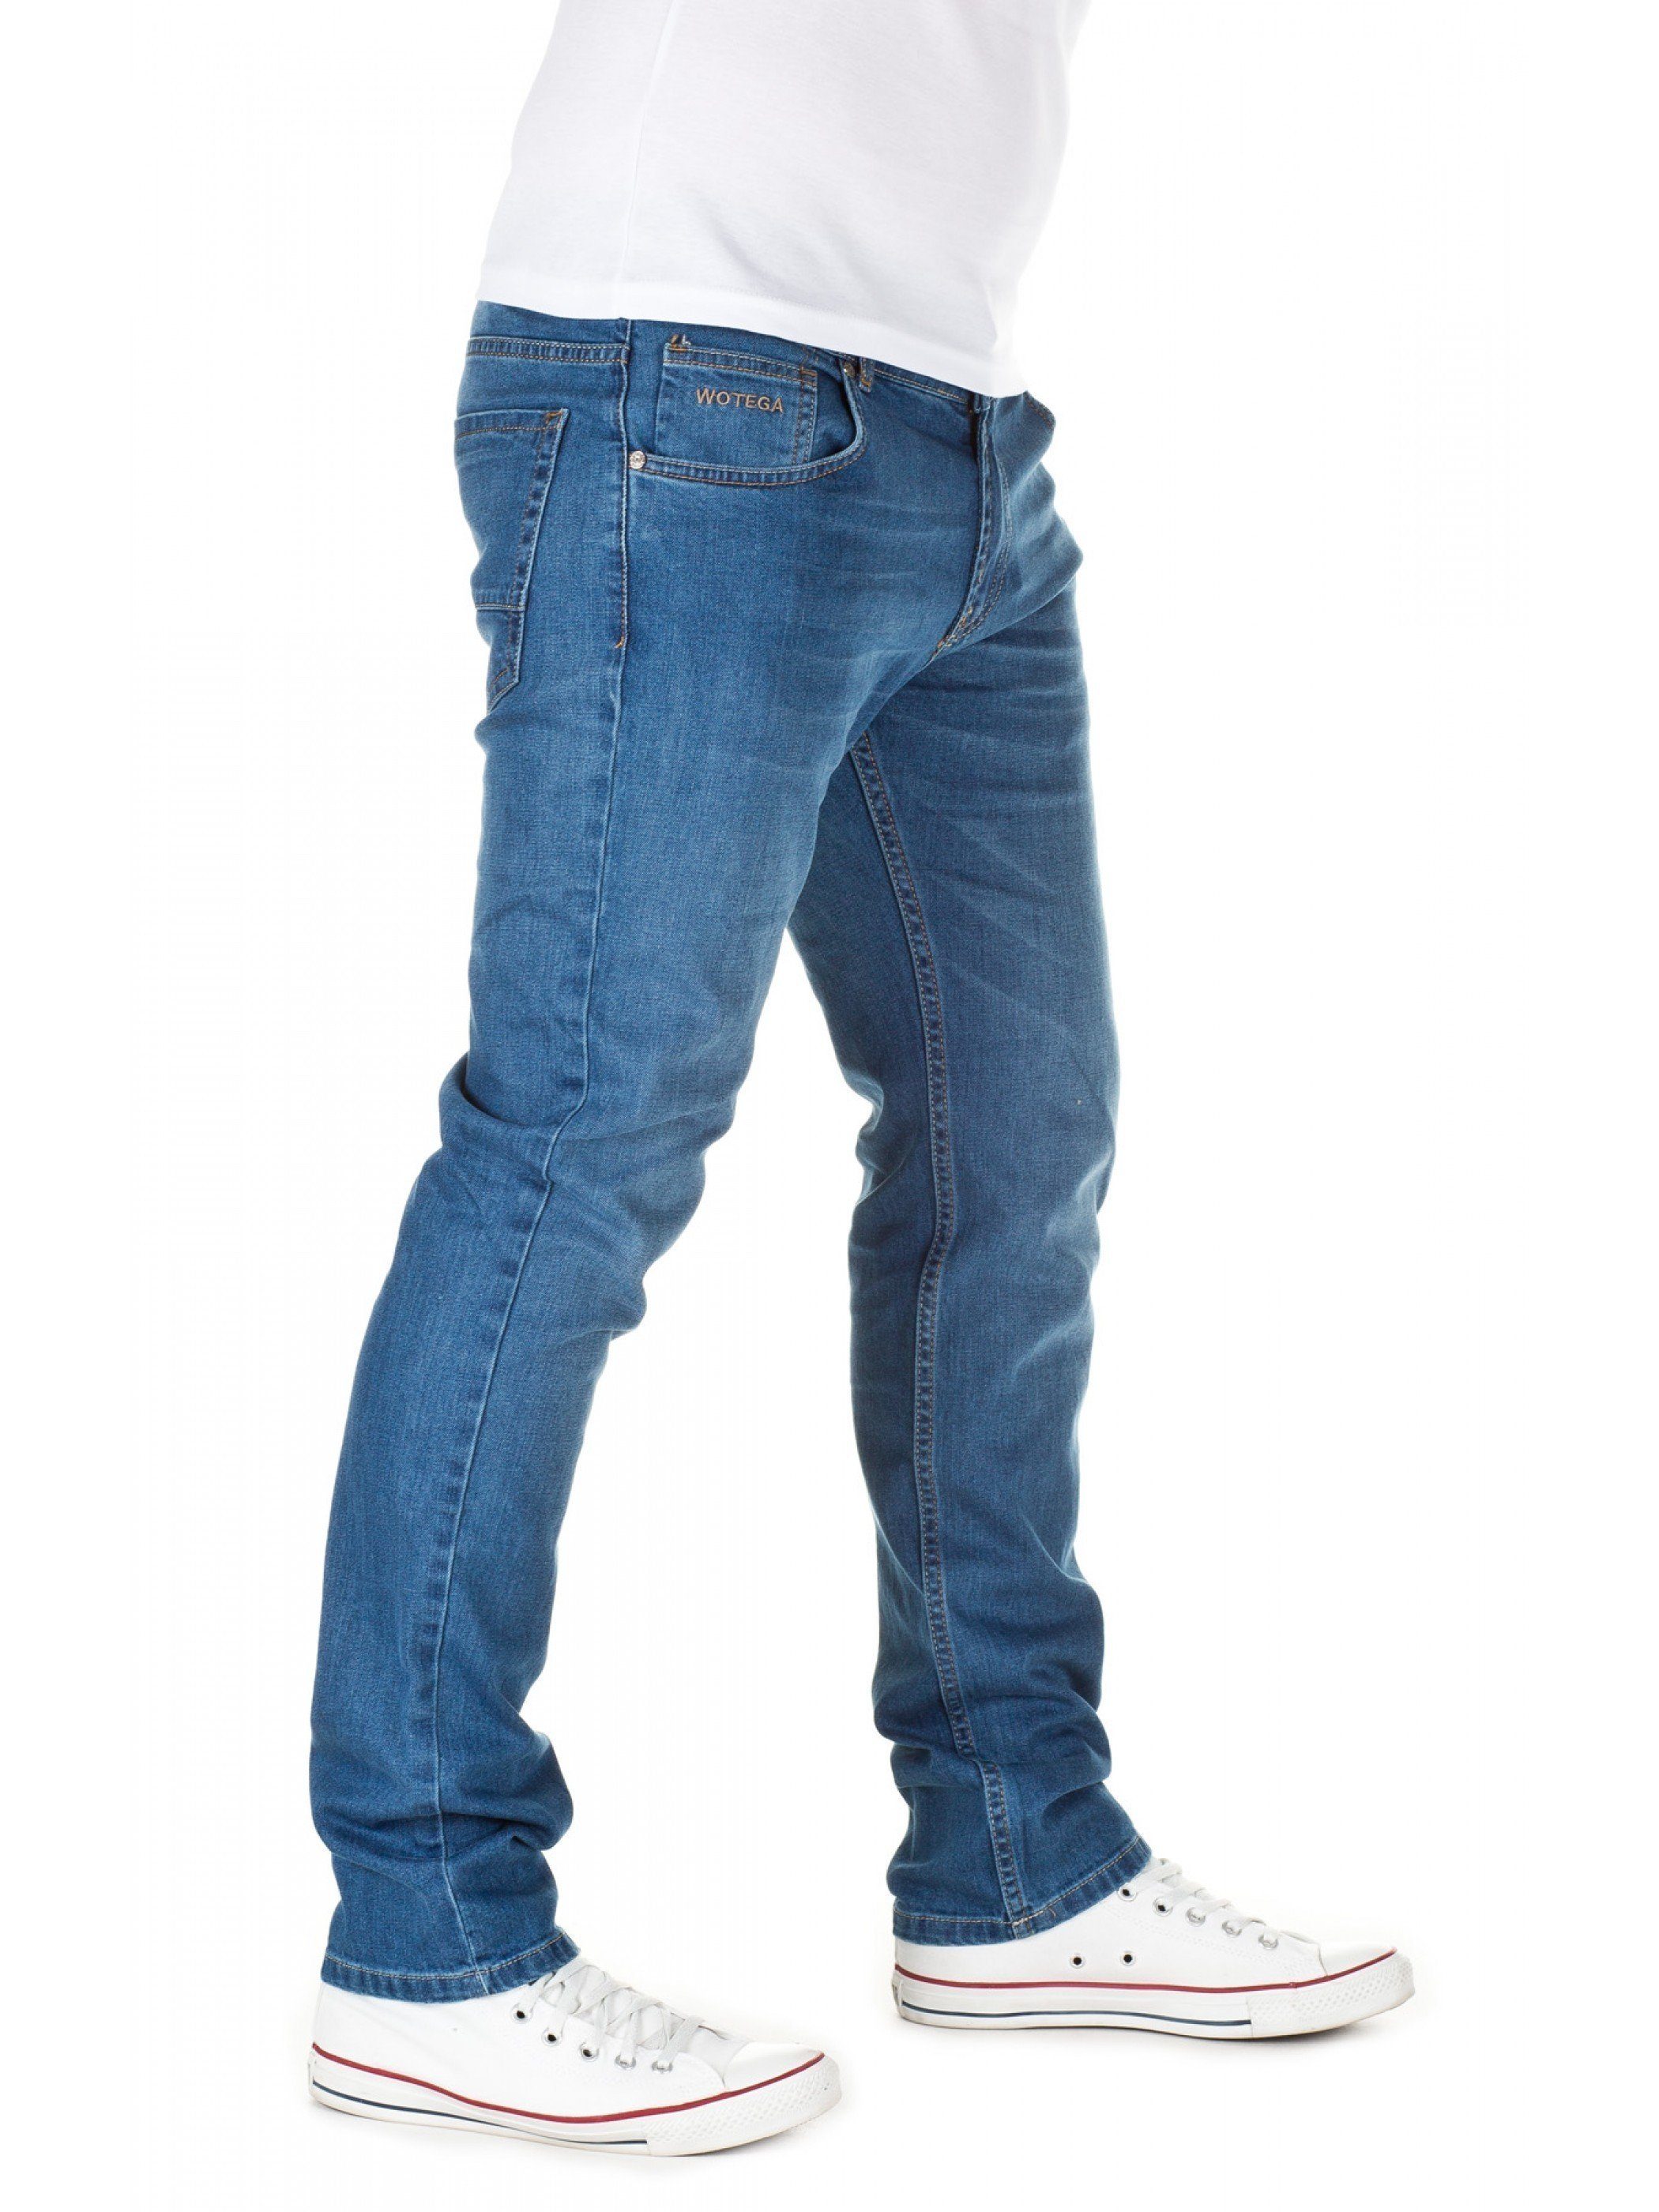 WOTEGA Slim-fit-Jeans (blue Travis Jeans indigo 3928) Blau